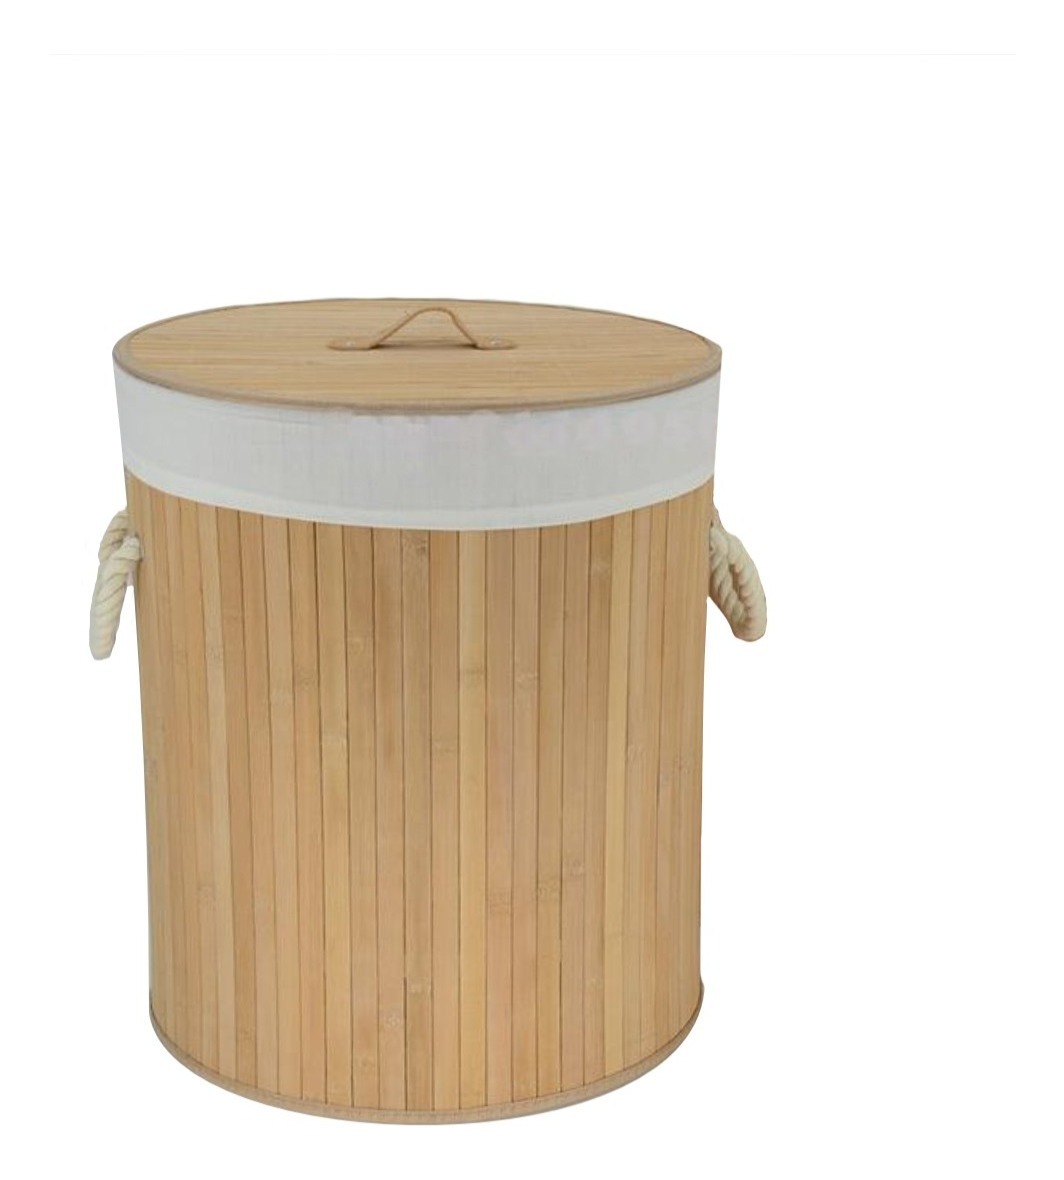 NZ-1BS-Bambú, Cesto para la ropa sucia con mueble, Bambú